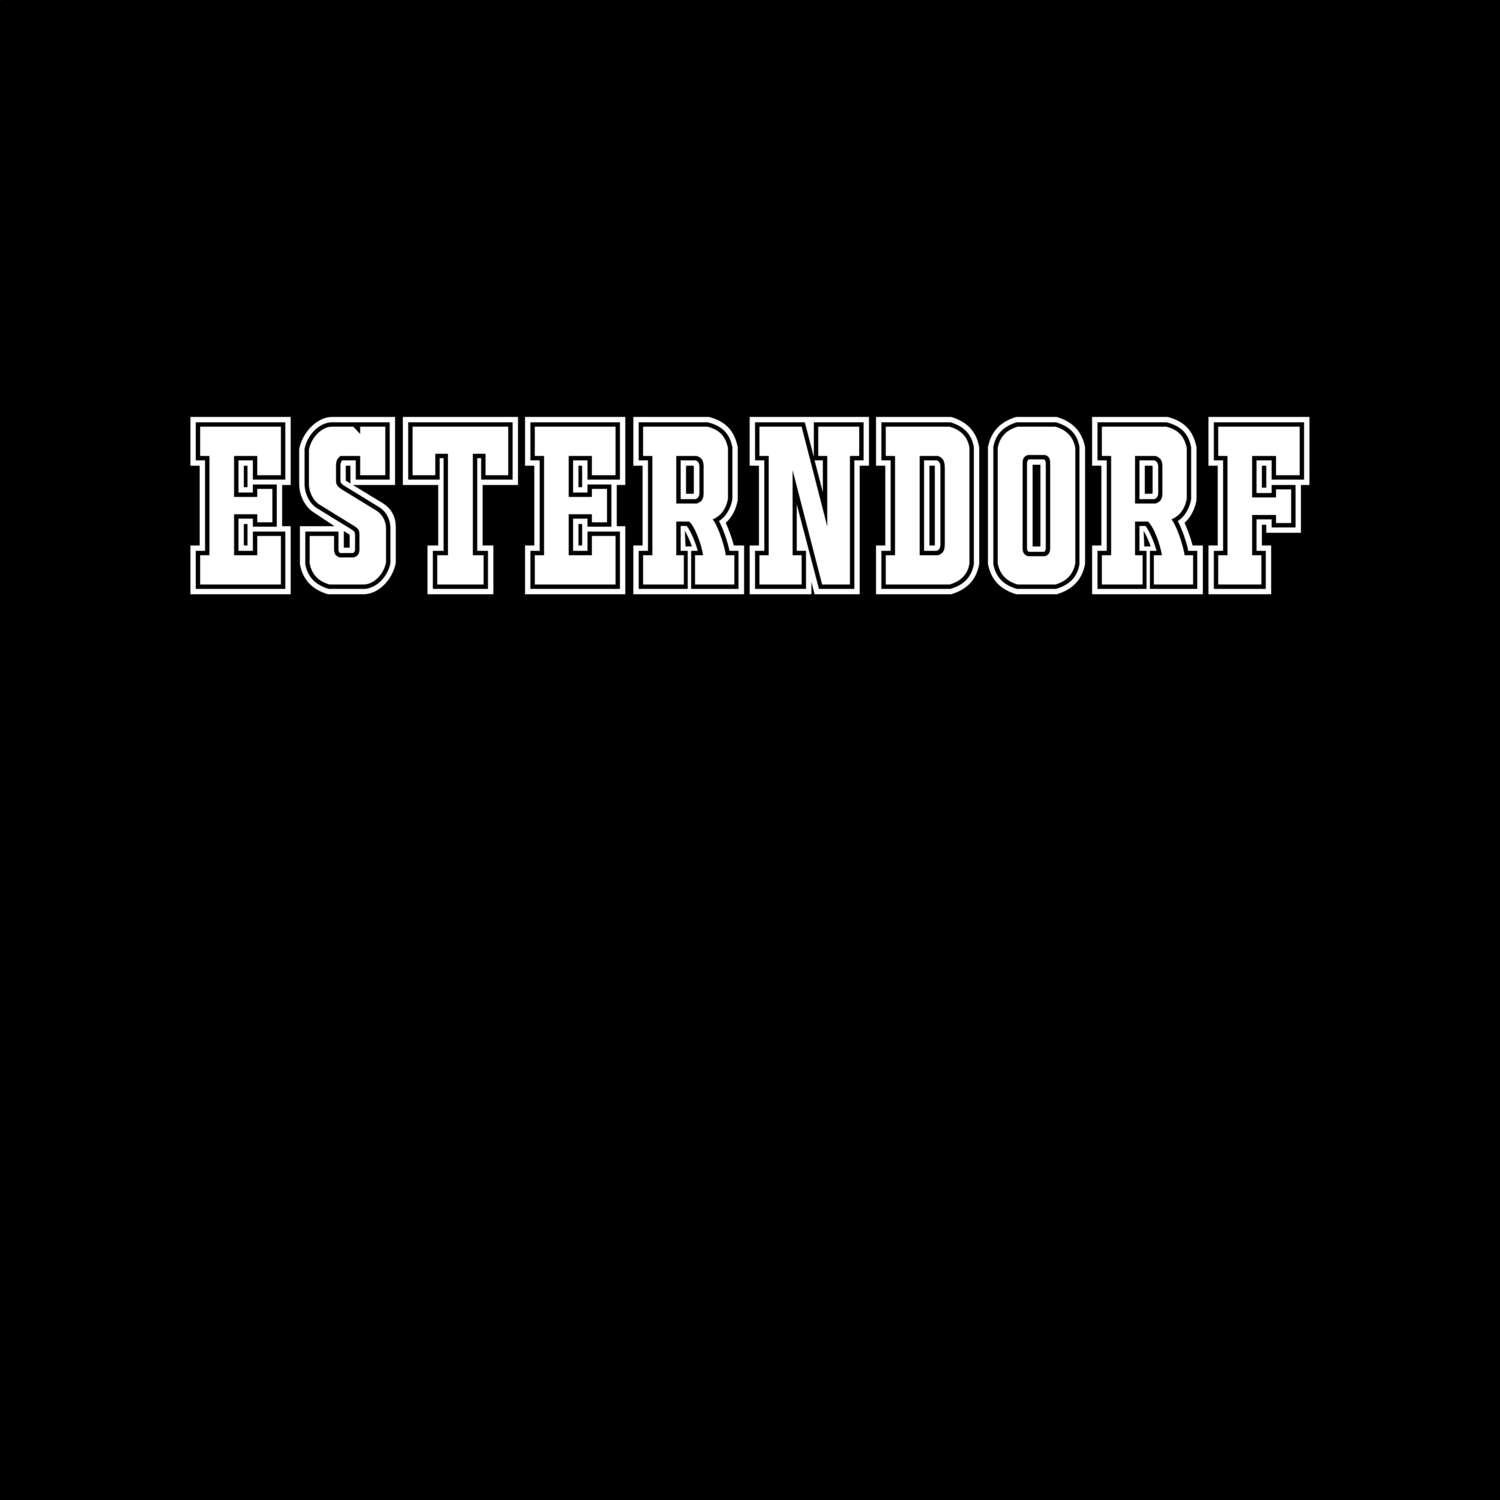 Esterndorf T-Shirt »Classic«